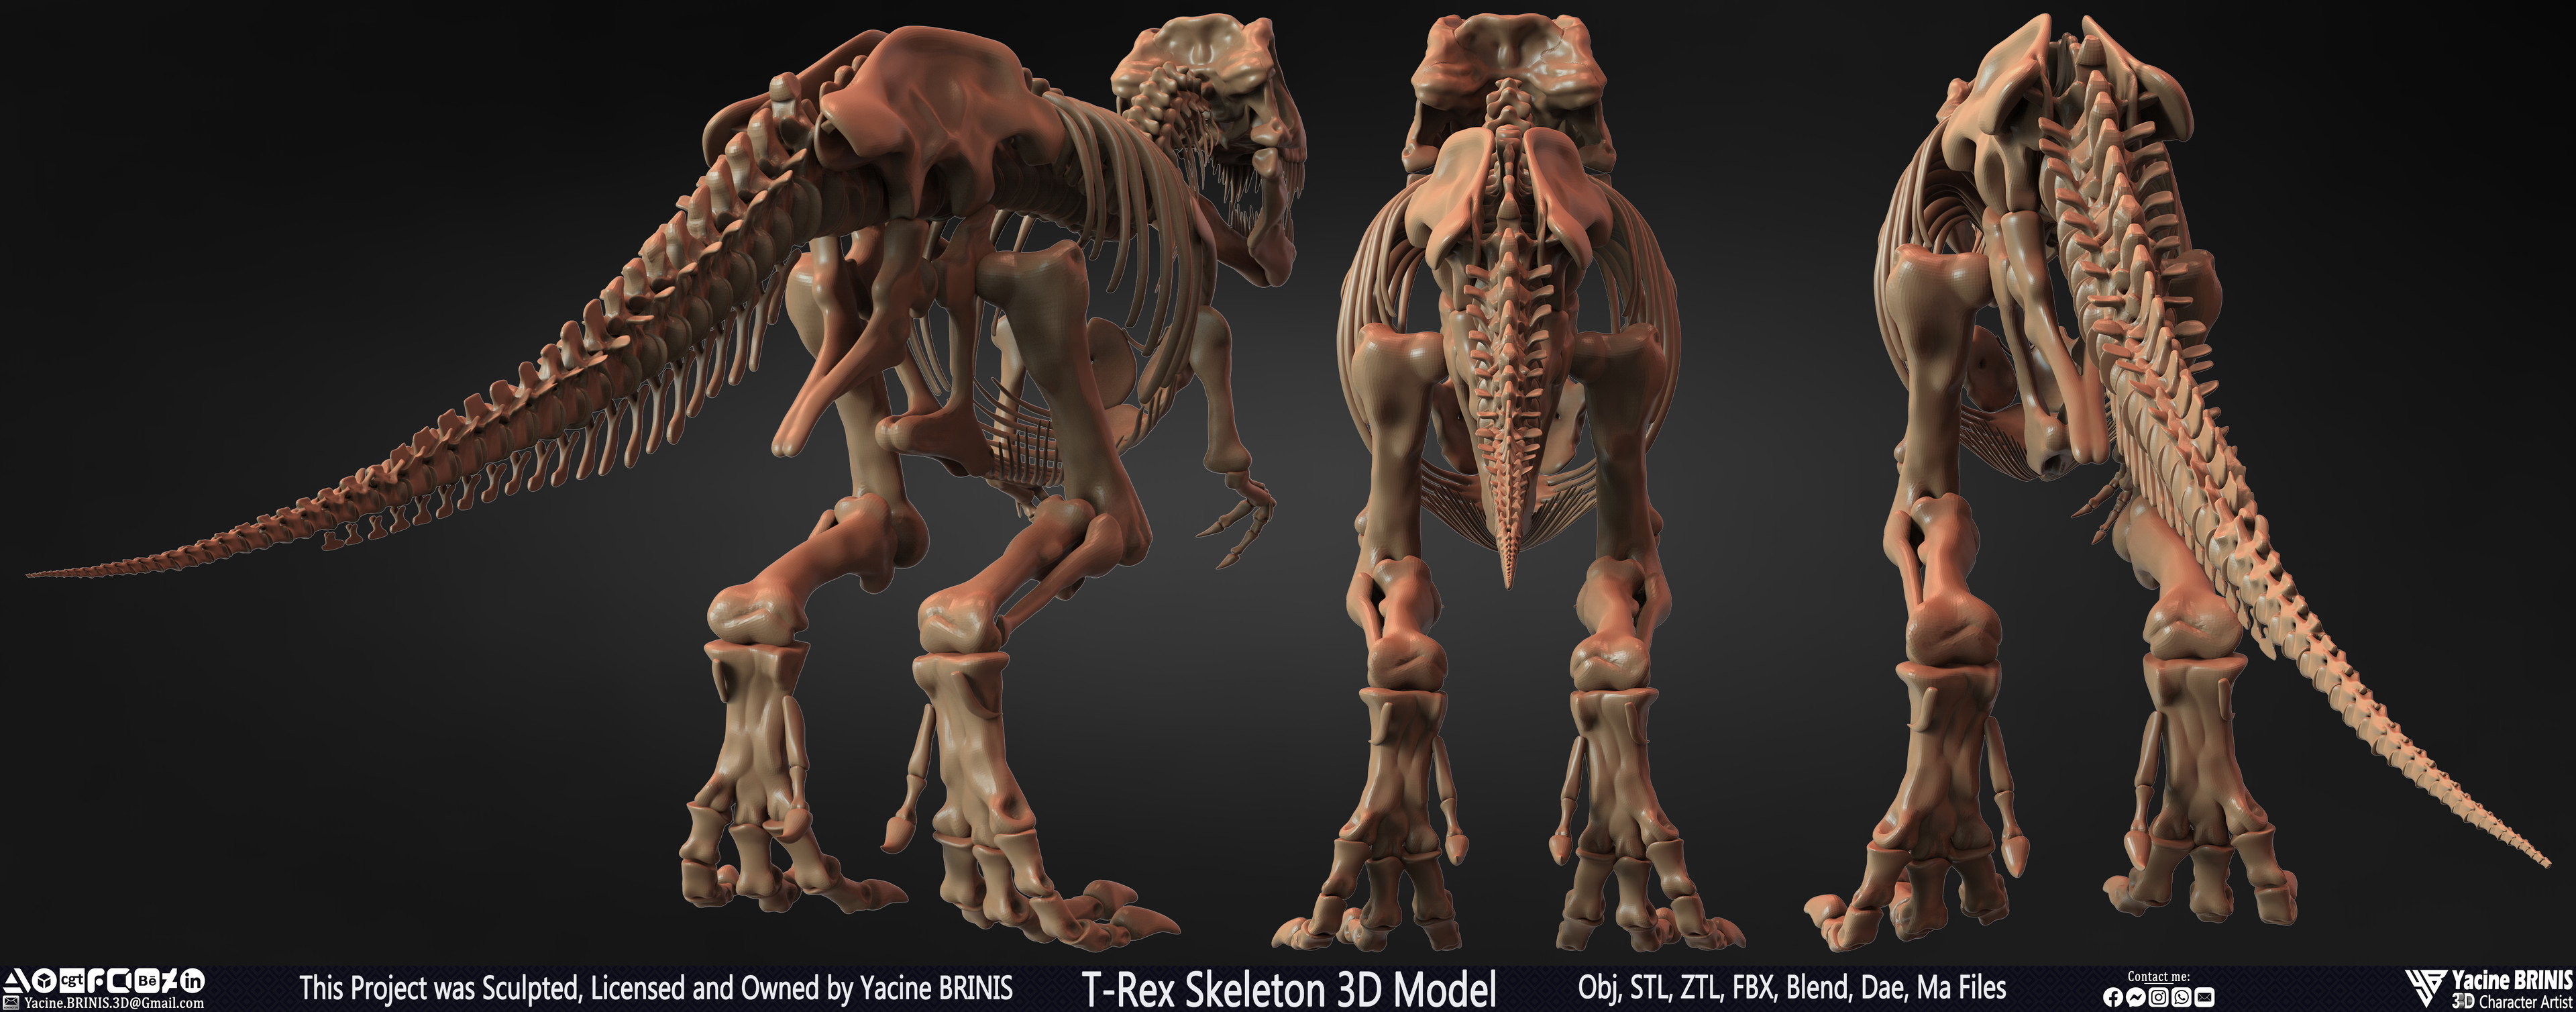 T-Rex Skeleton 3D Model (Tyrannosaurus Rex) Sculpted By Yacine BRINIS Set 003